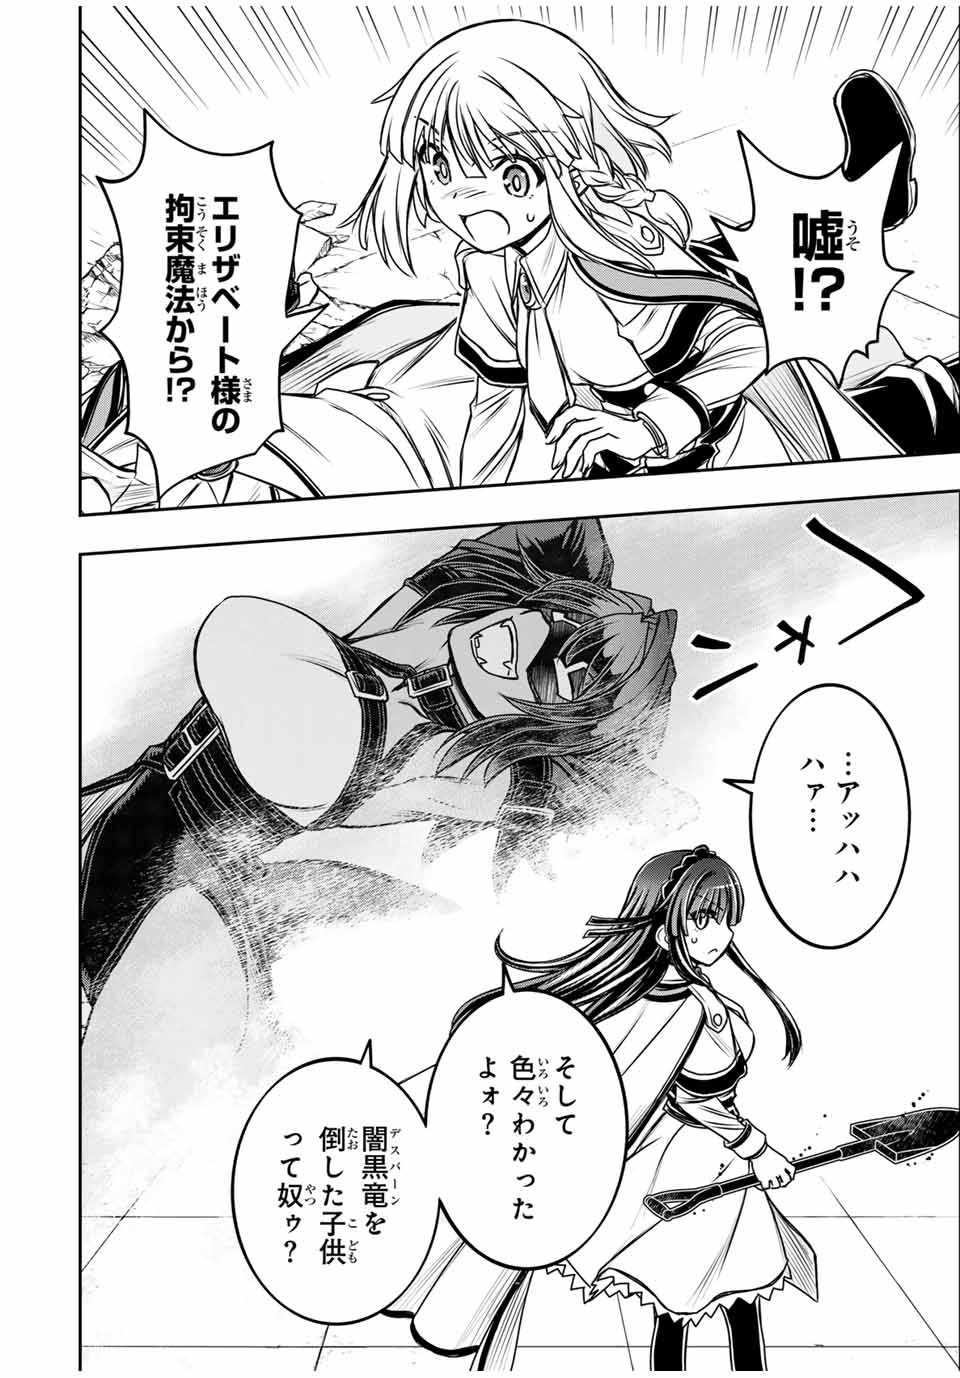 Nengan no Akuyaku Reijou (Last Boss) no Karada wo Teniiretazo!  - Chapter 26 - Page 10